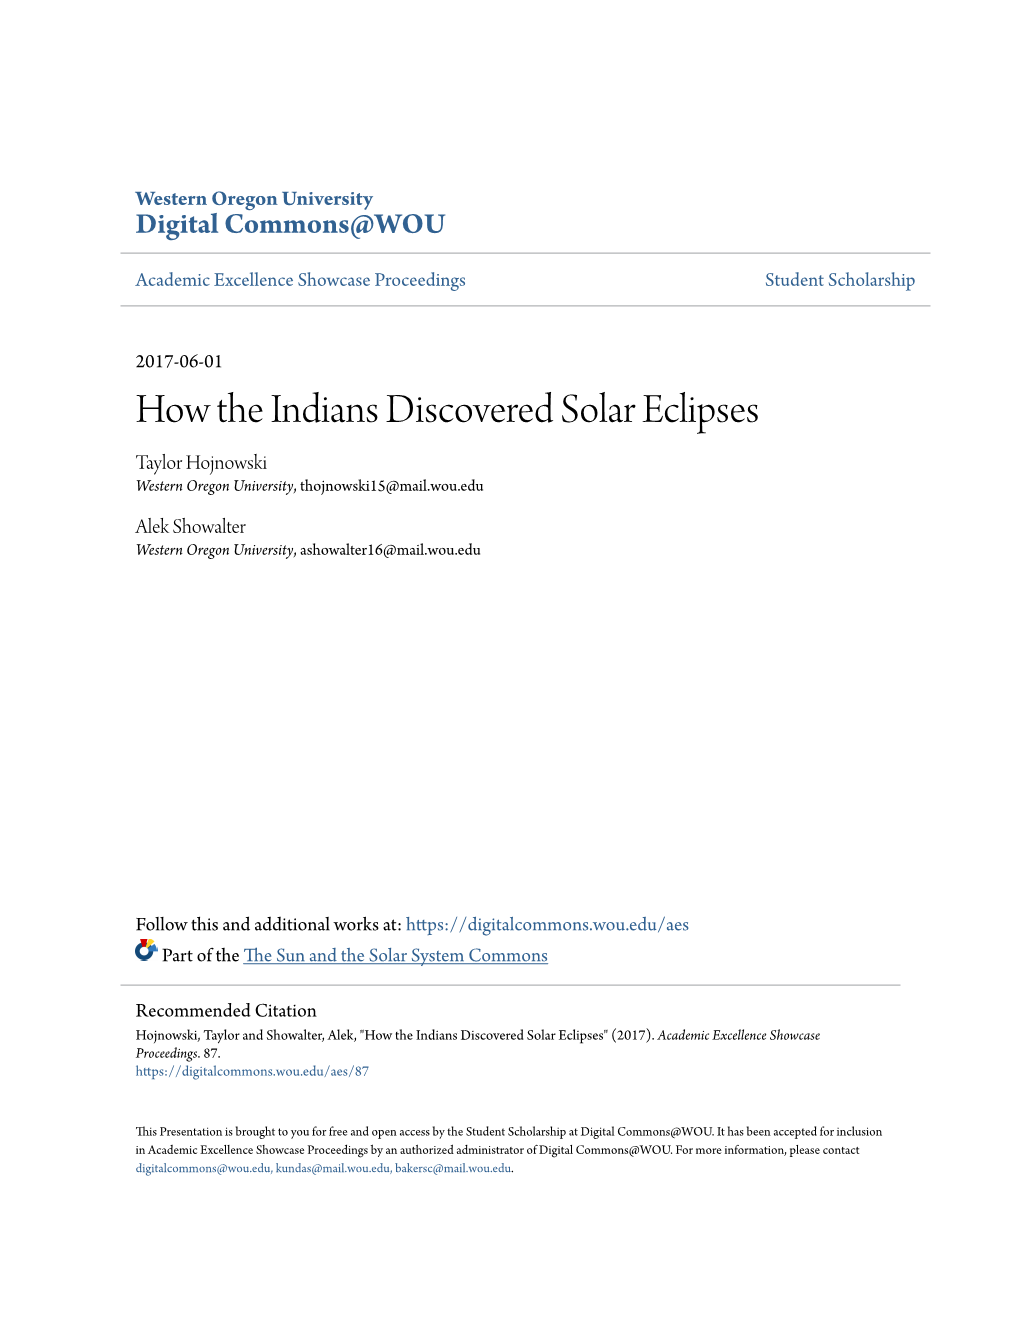 How the Indians Discovered Solar Eclipses Taylor Hojnowski Western Oregon University, Thojnowski15@Mail.Wou.Edu